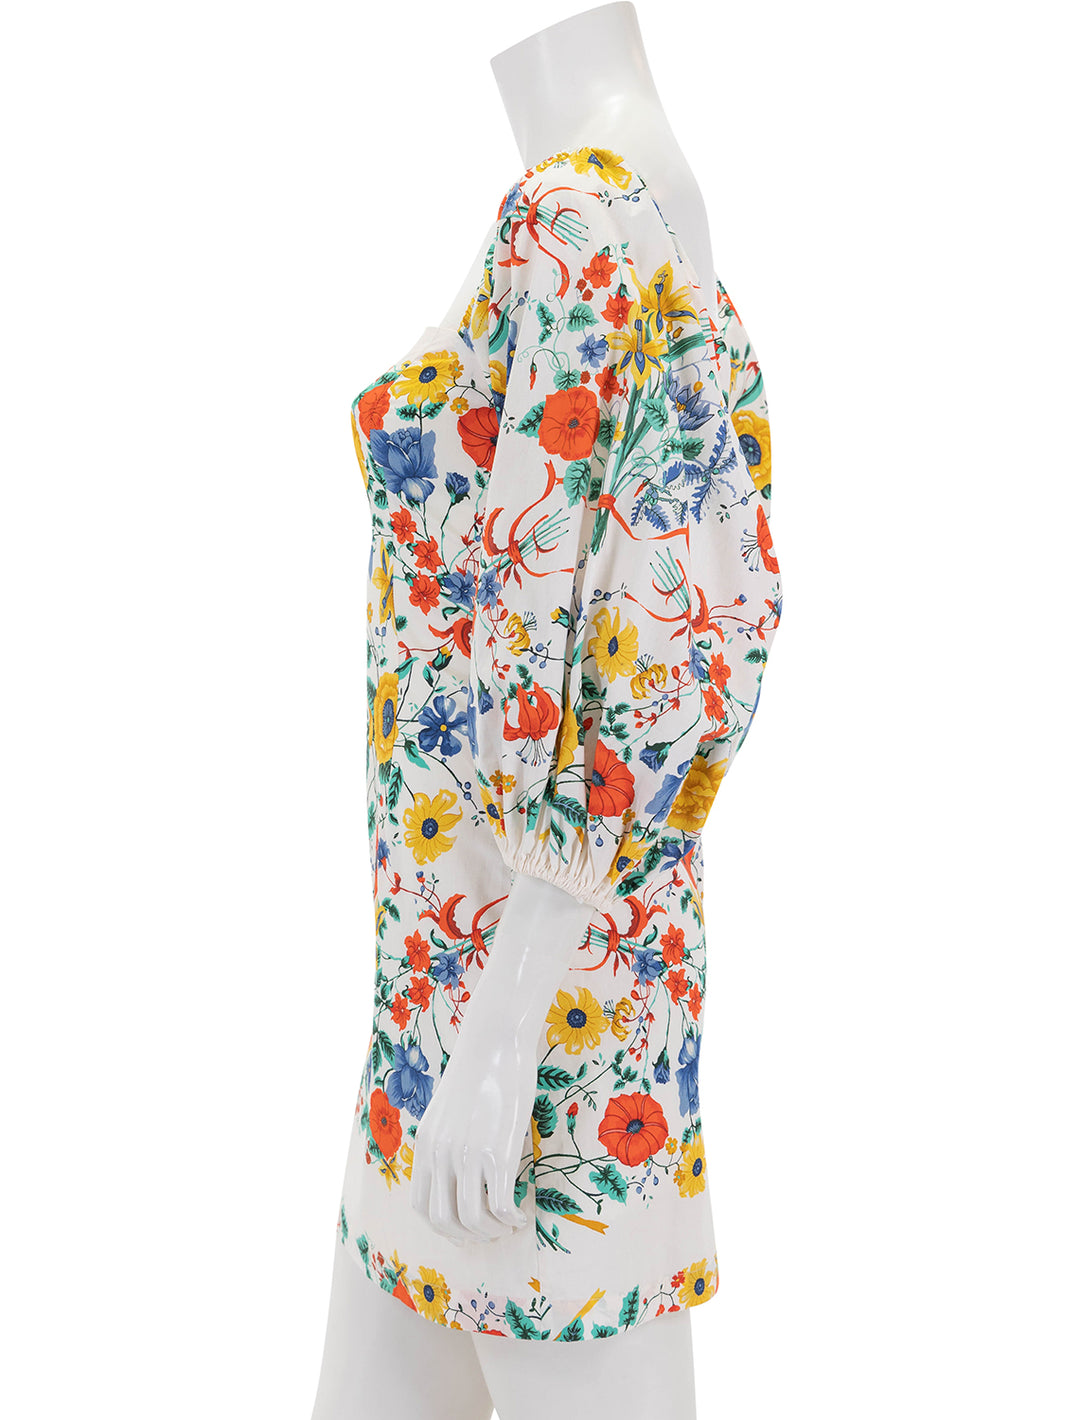 Side view of Cara Cara's montauk dress in flora scarf turtledove.